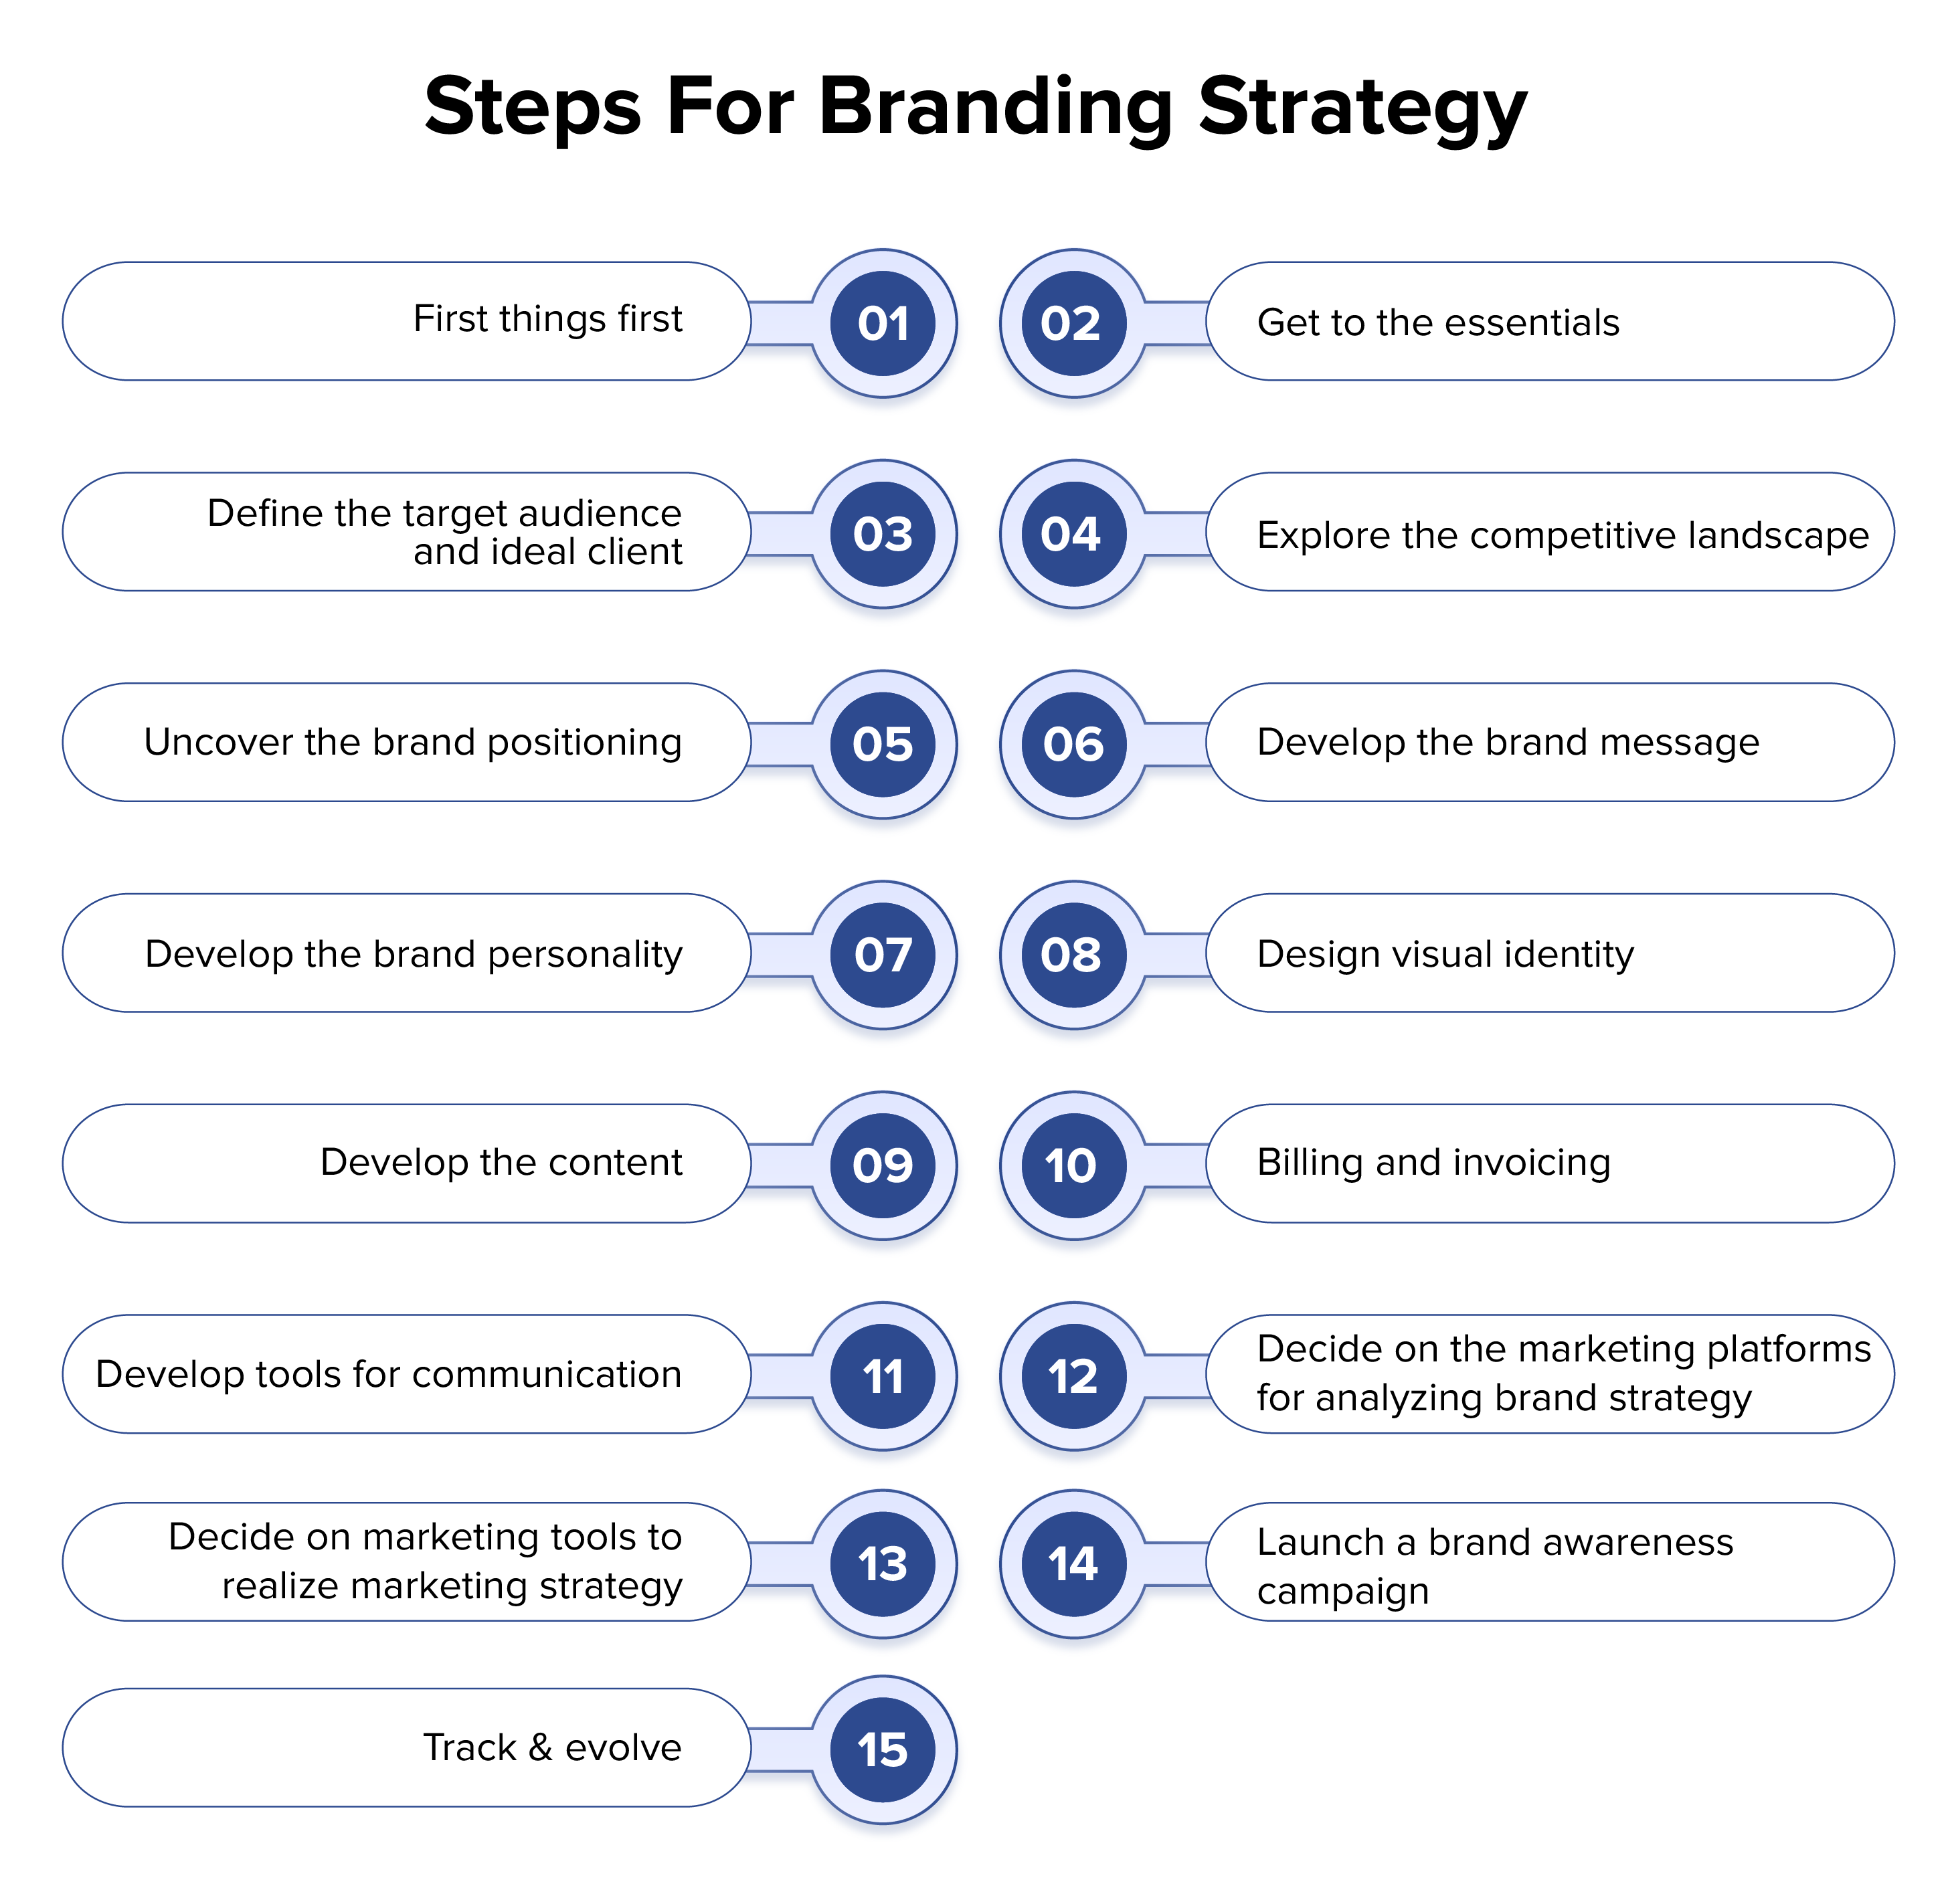 Steps For Branding Strategy